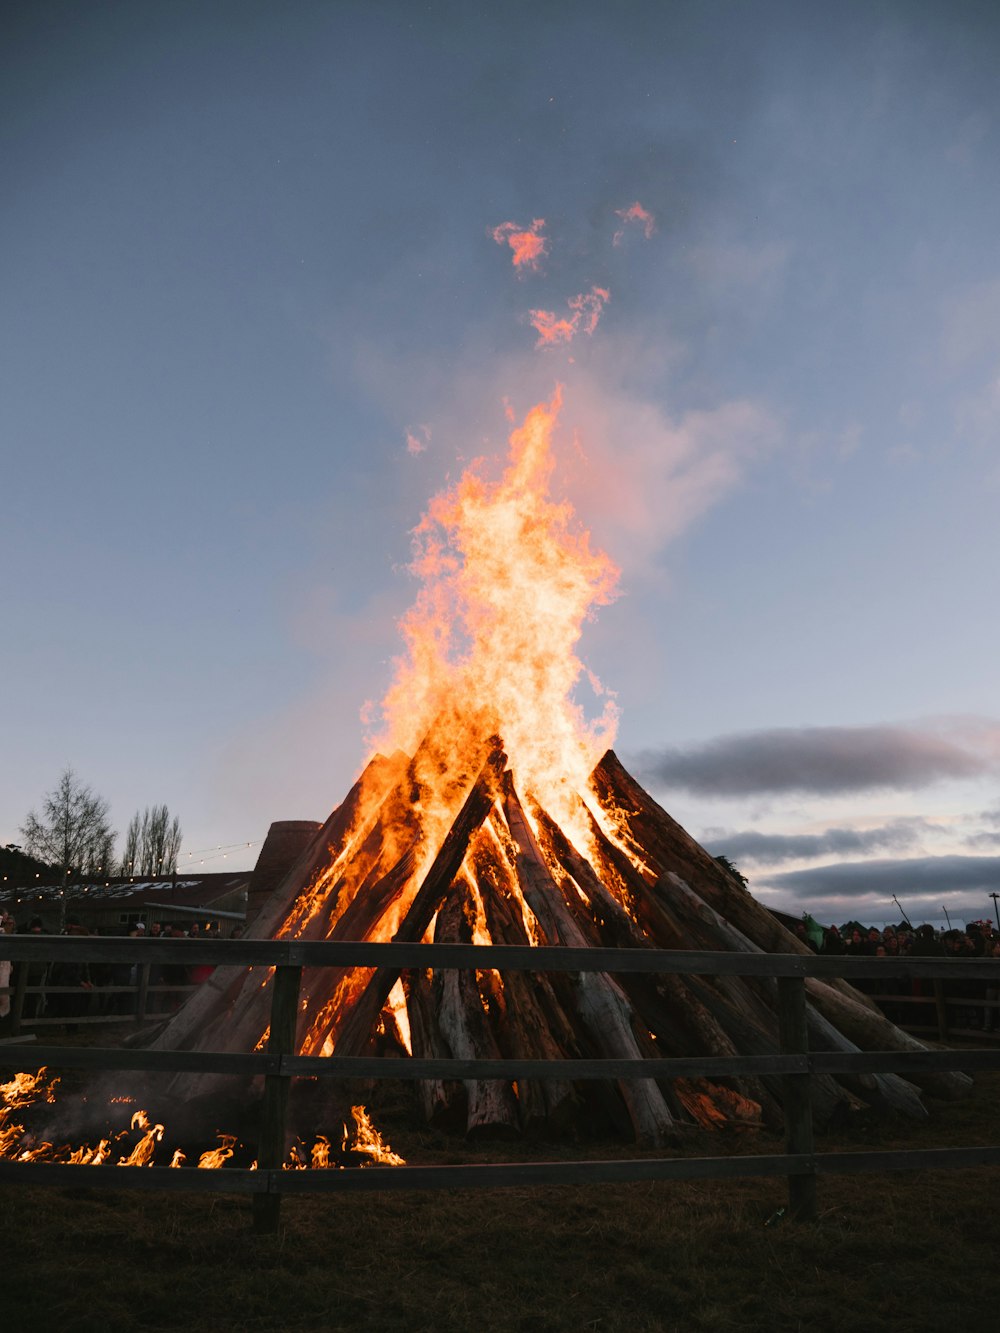 a large bonfire with flames